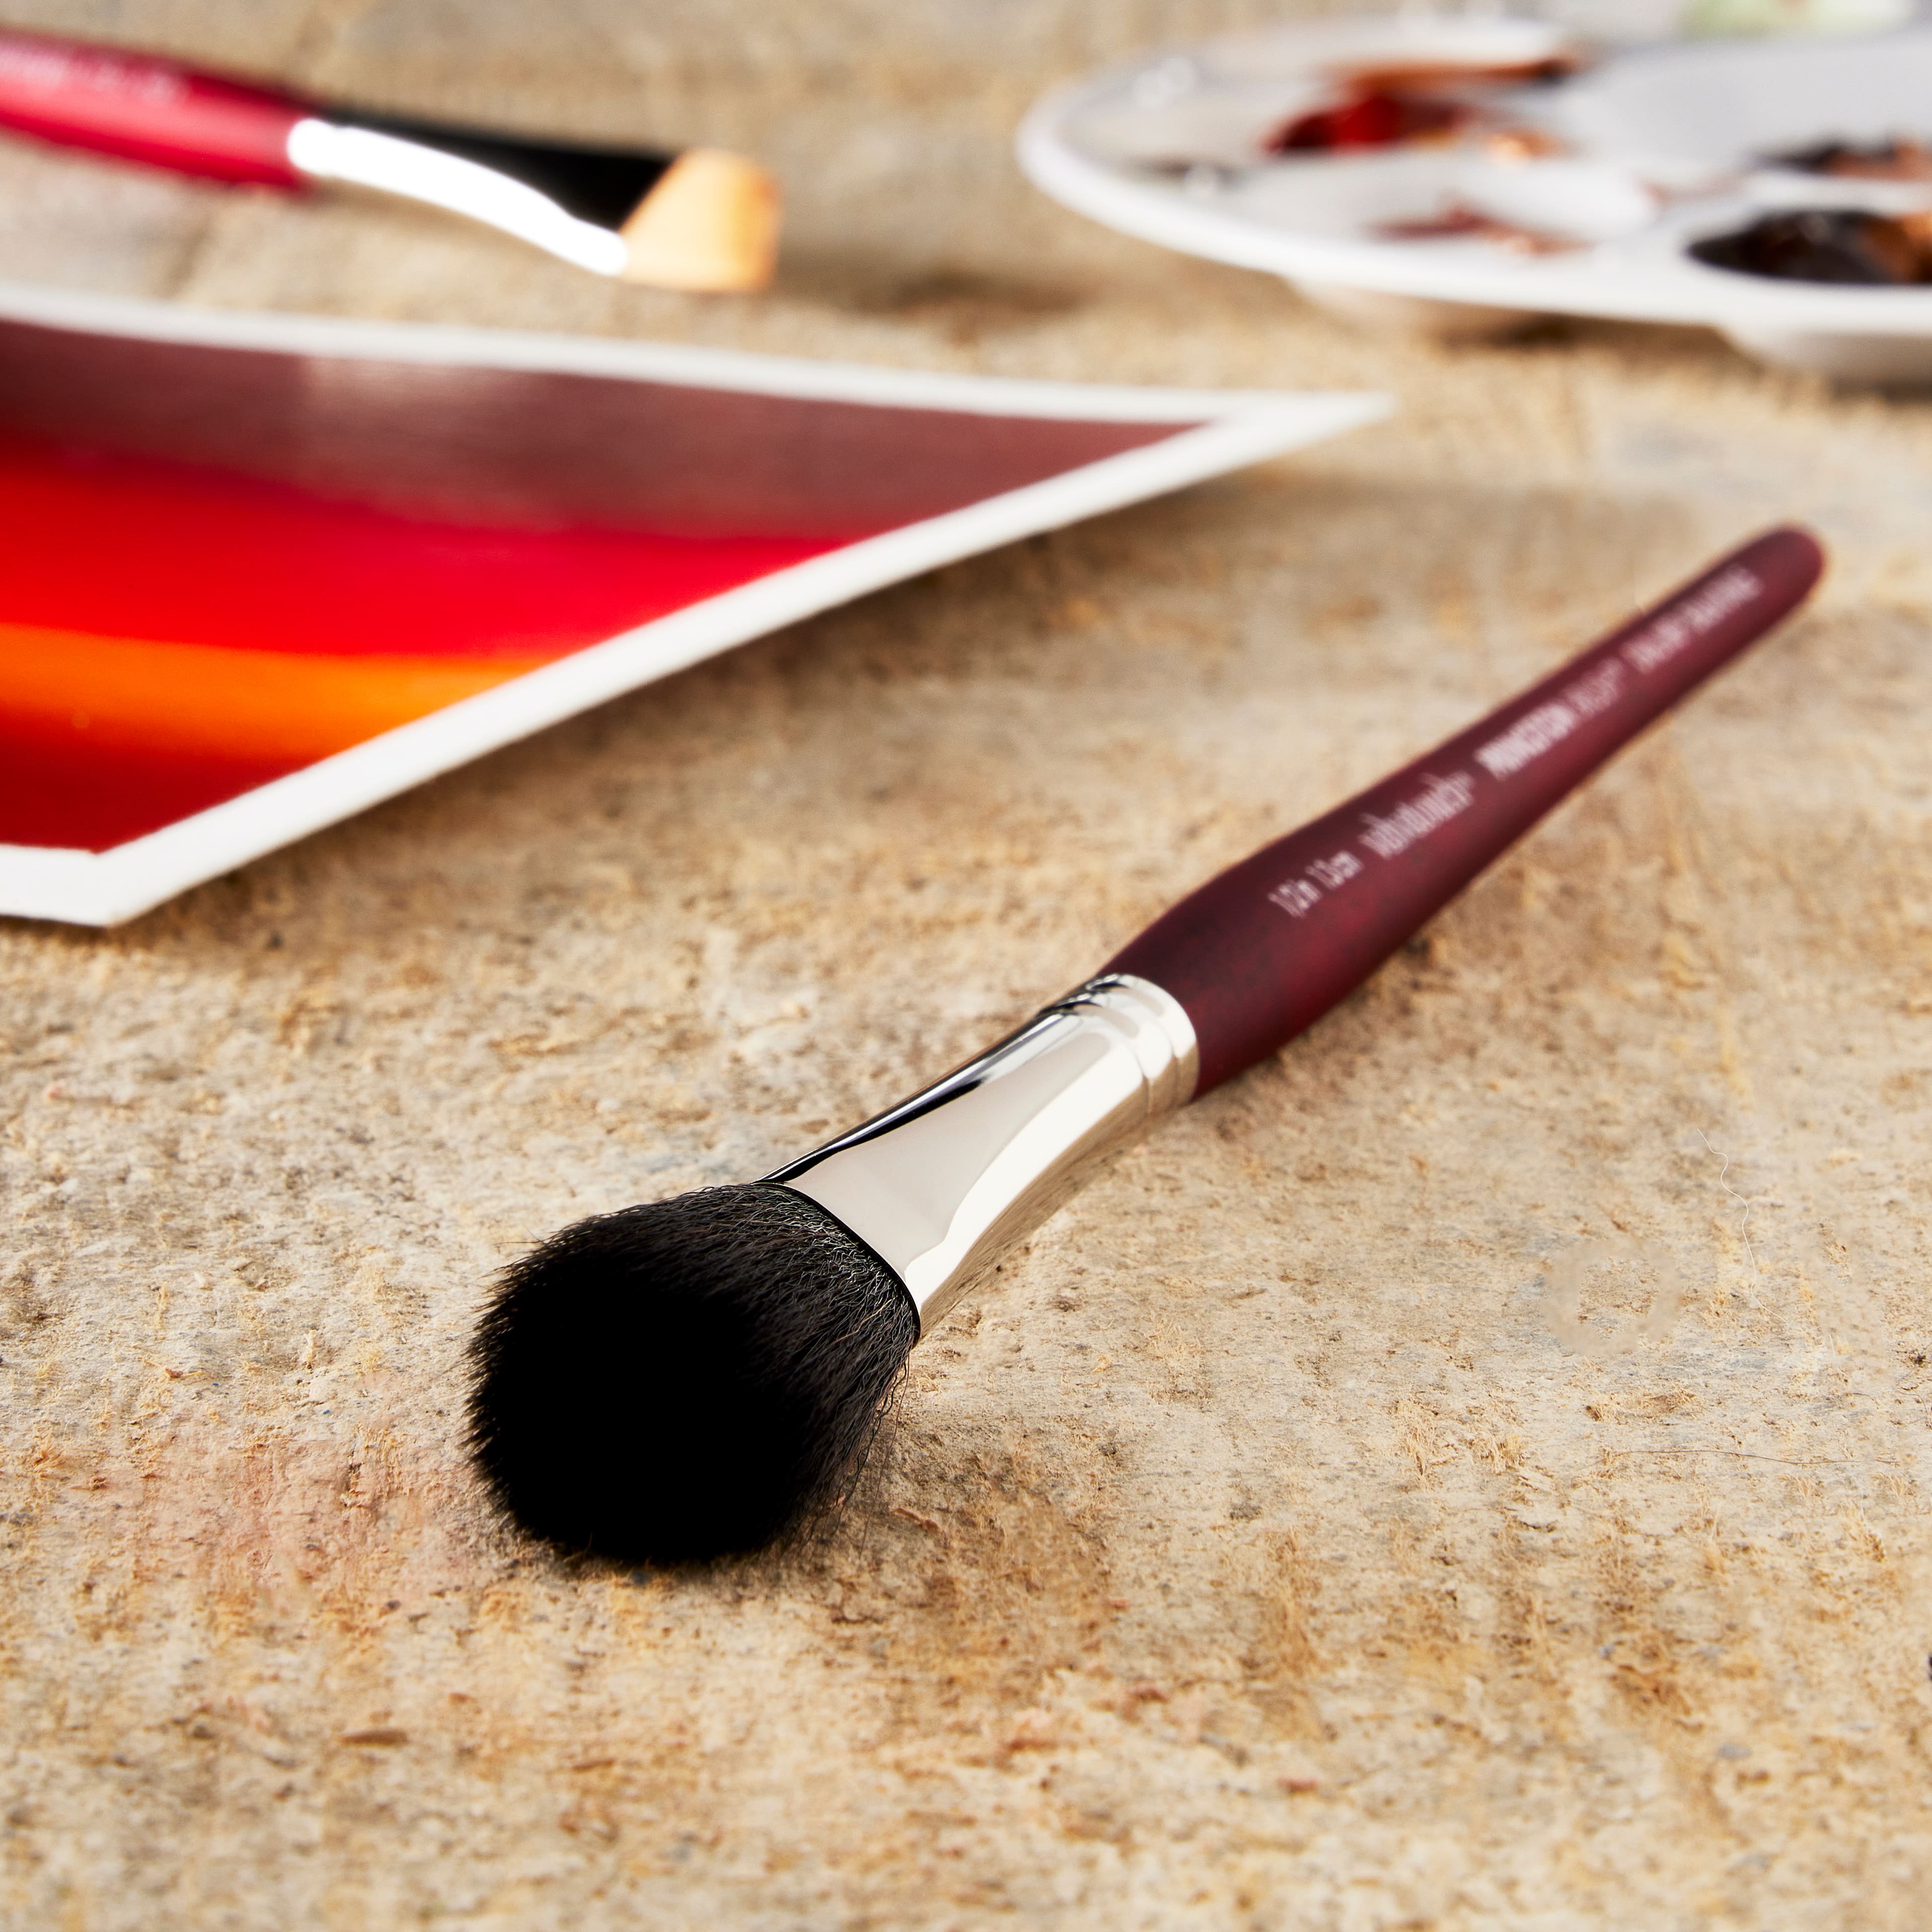 Princeton Oval Mop Brush – Art Dept.